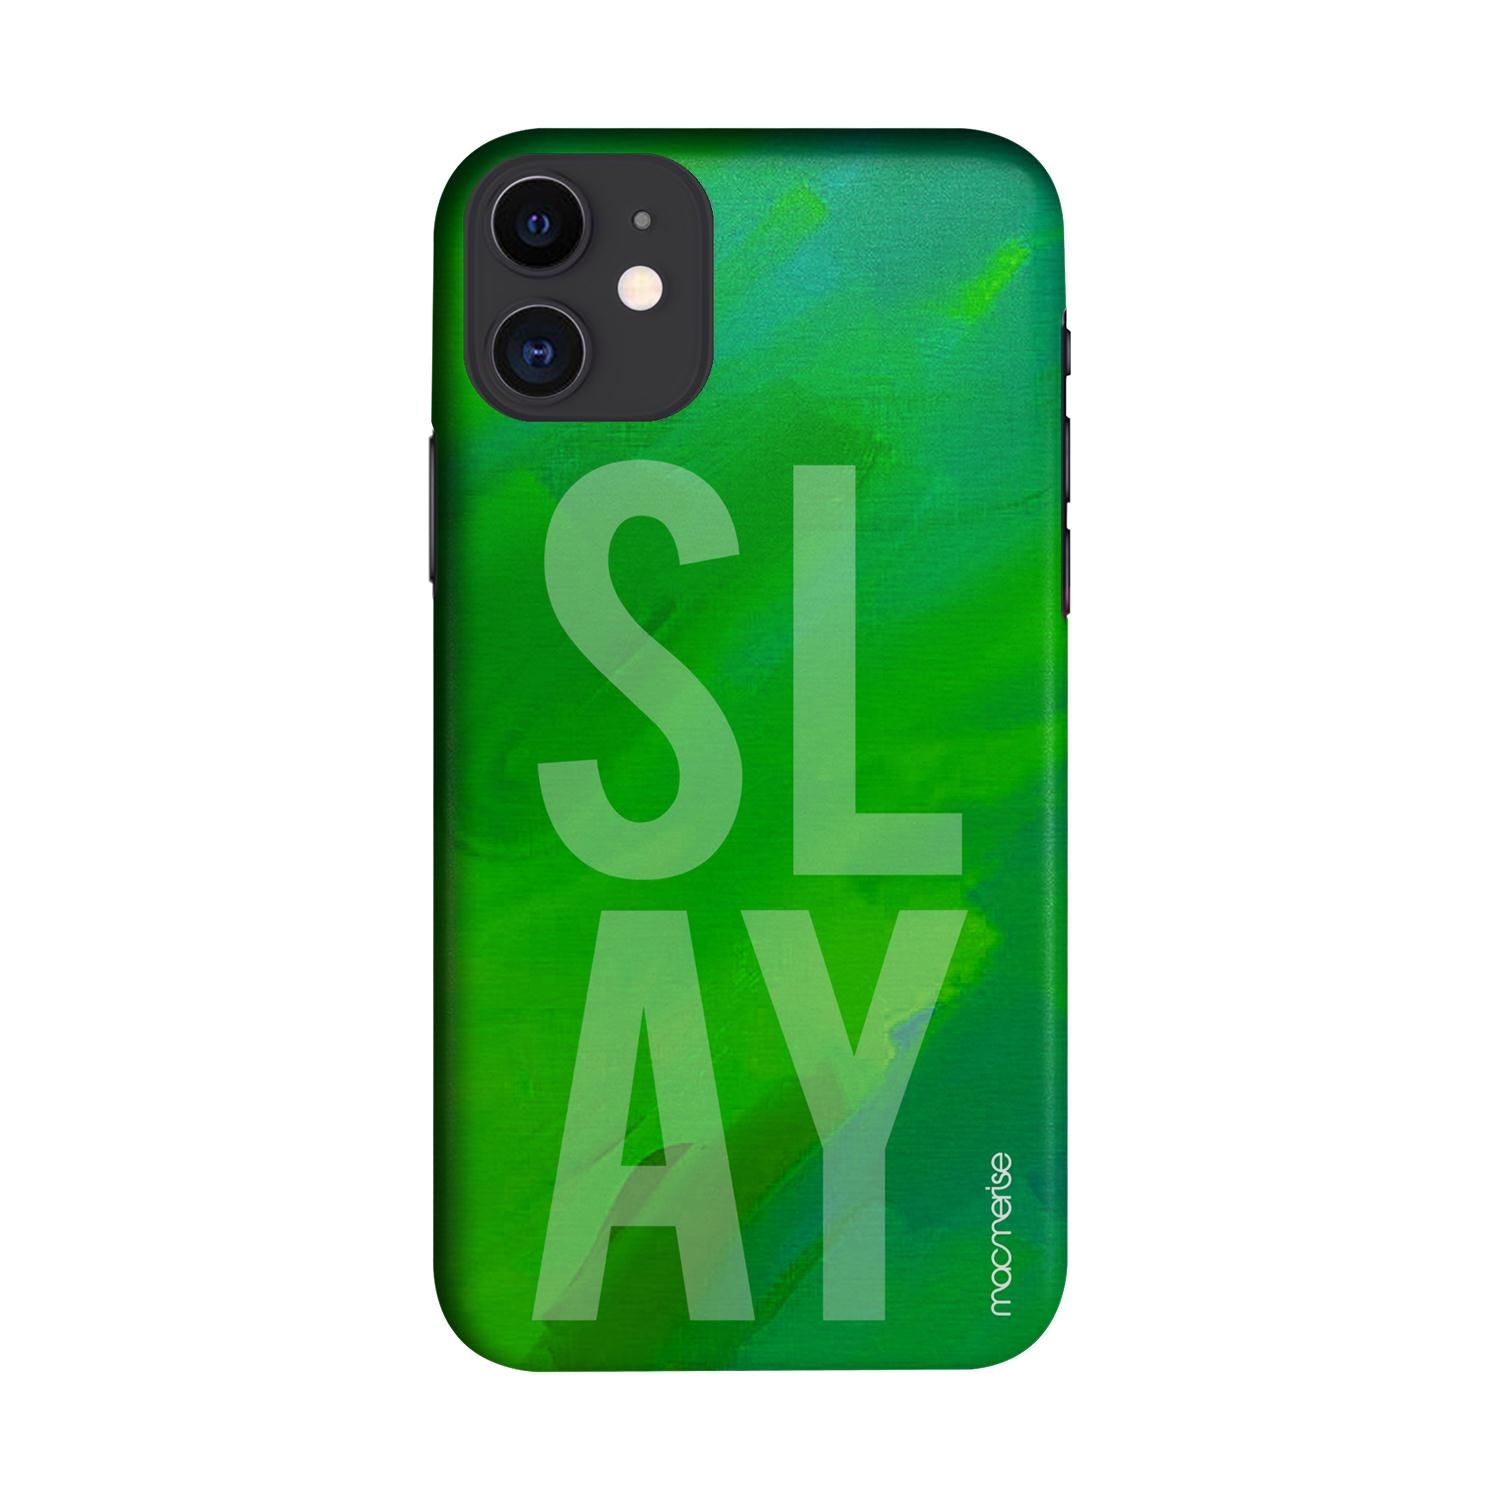 Buy Slay Green - Sleek Phone Case for iPhone 11 Online